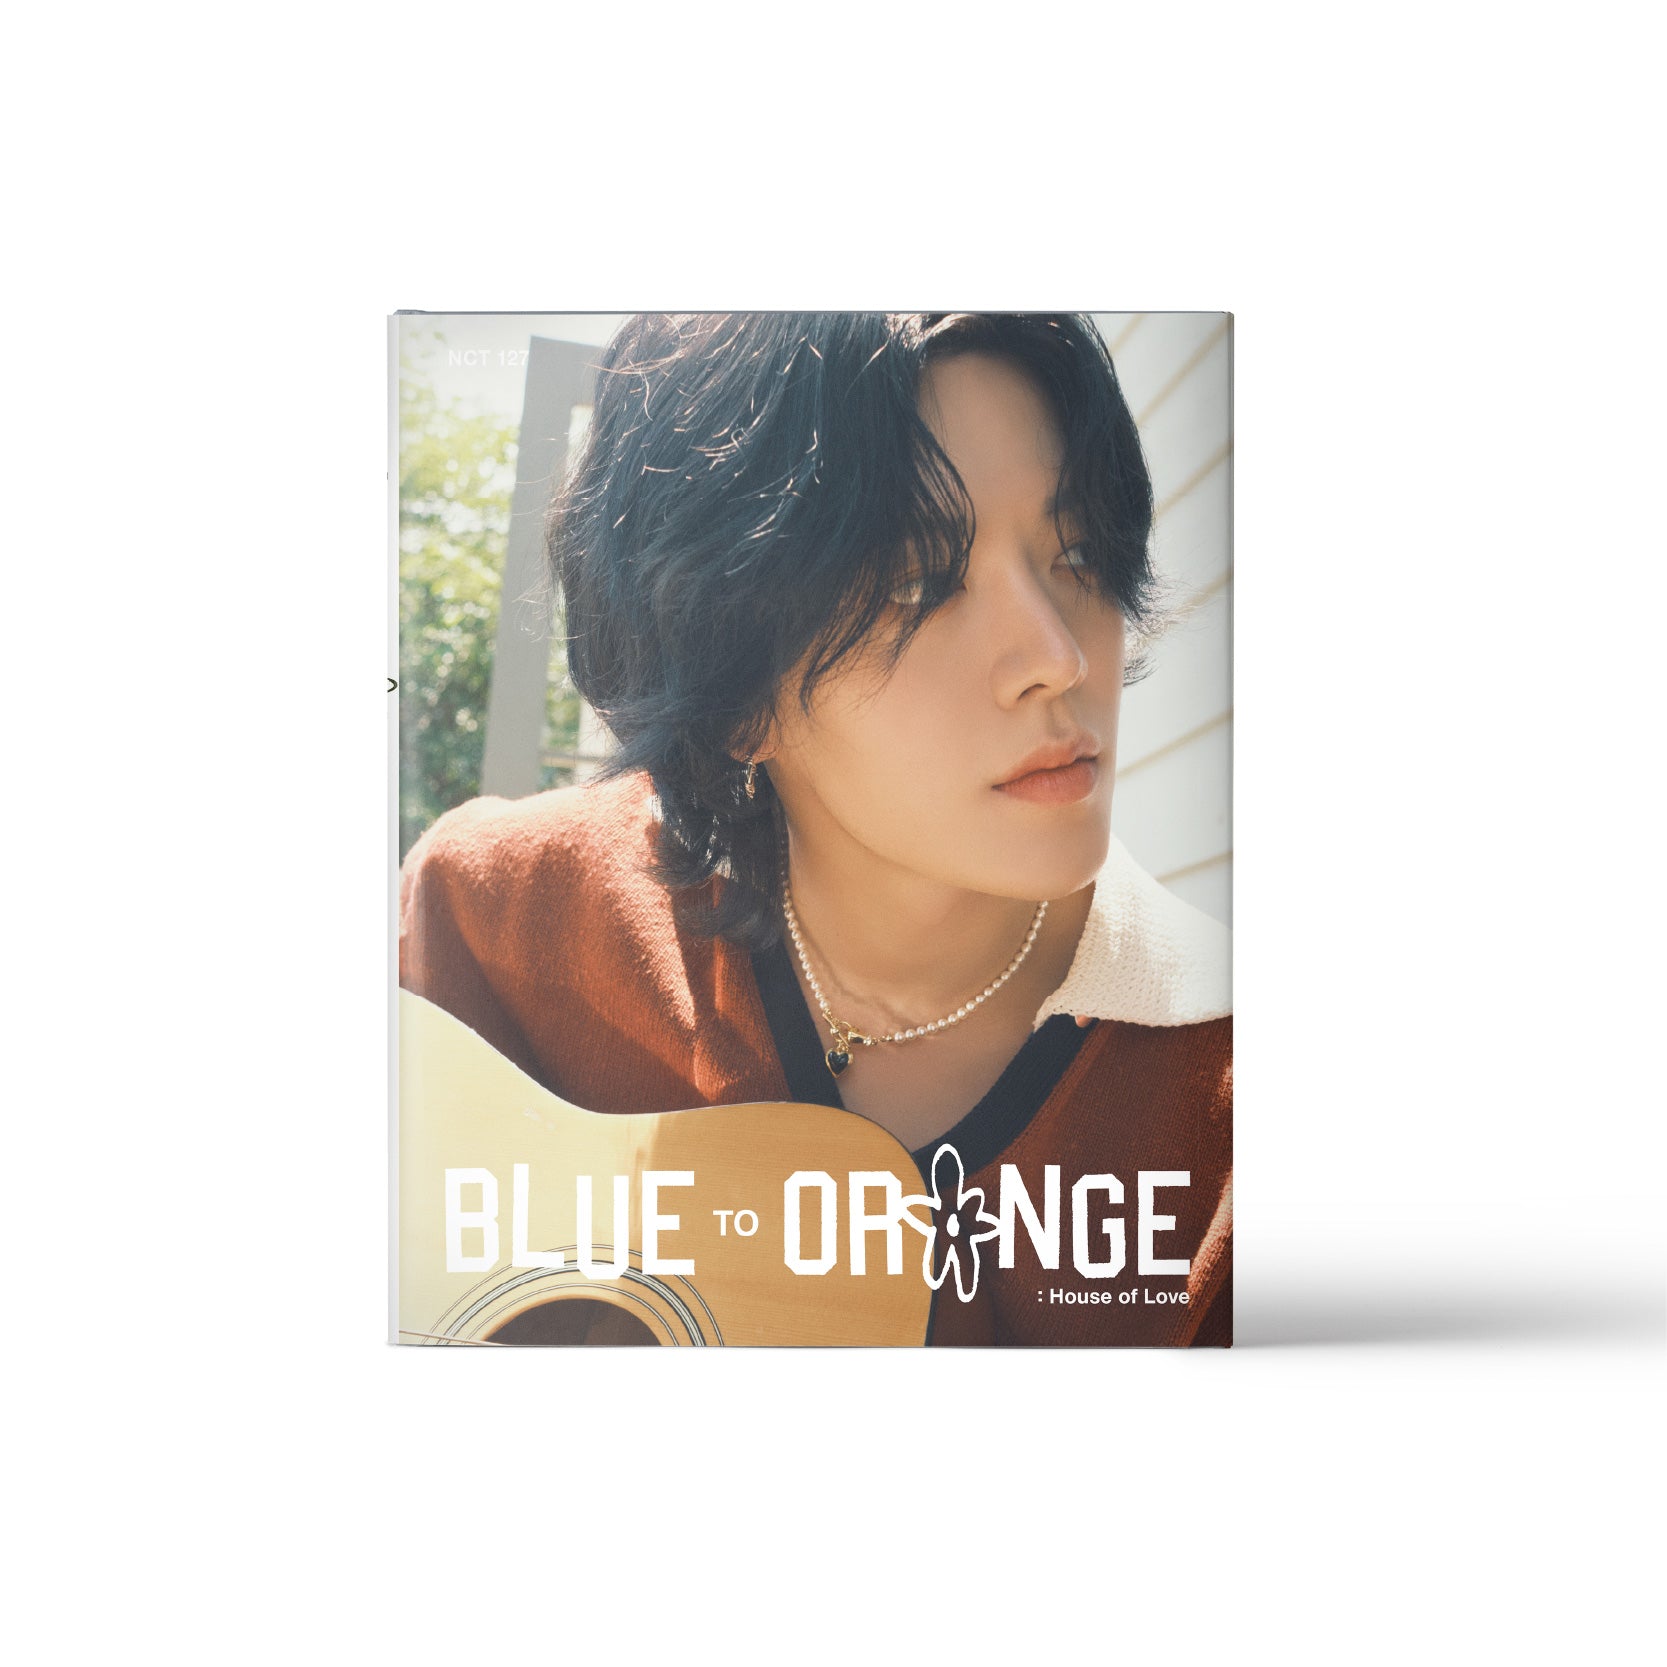 NCT 127 YUTA - BLUE TO ORANGE : House of Love (PHOTOBOOK)